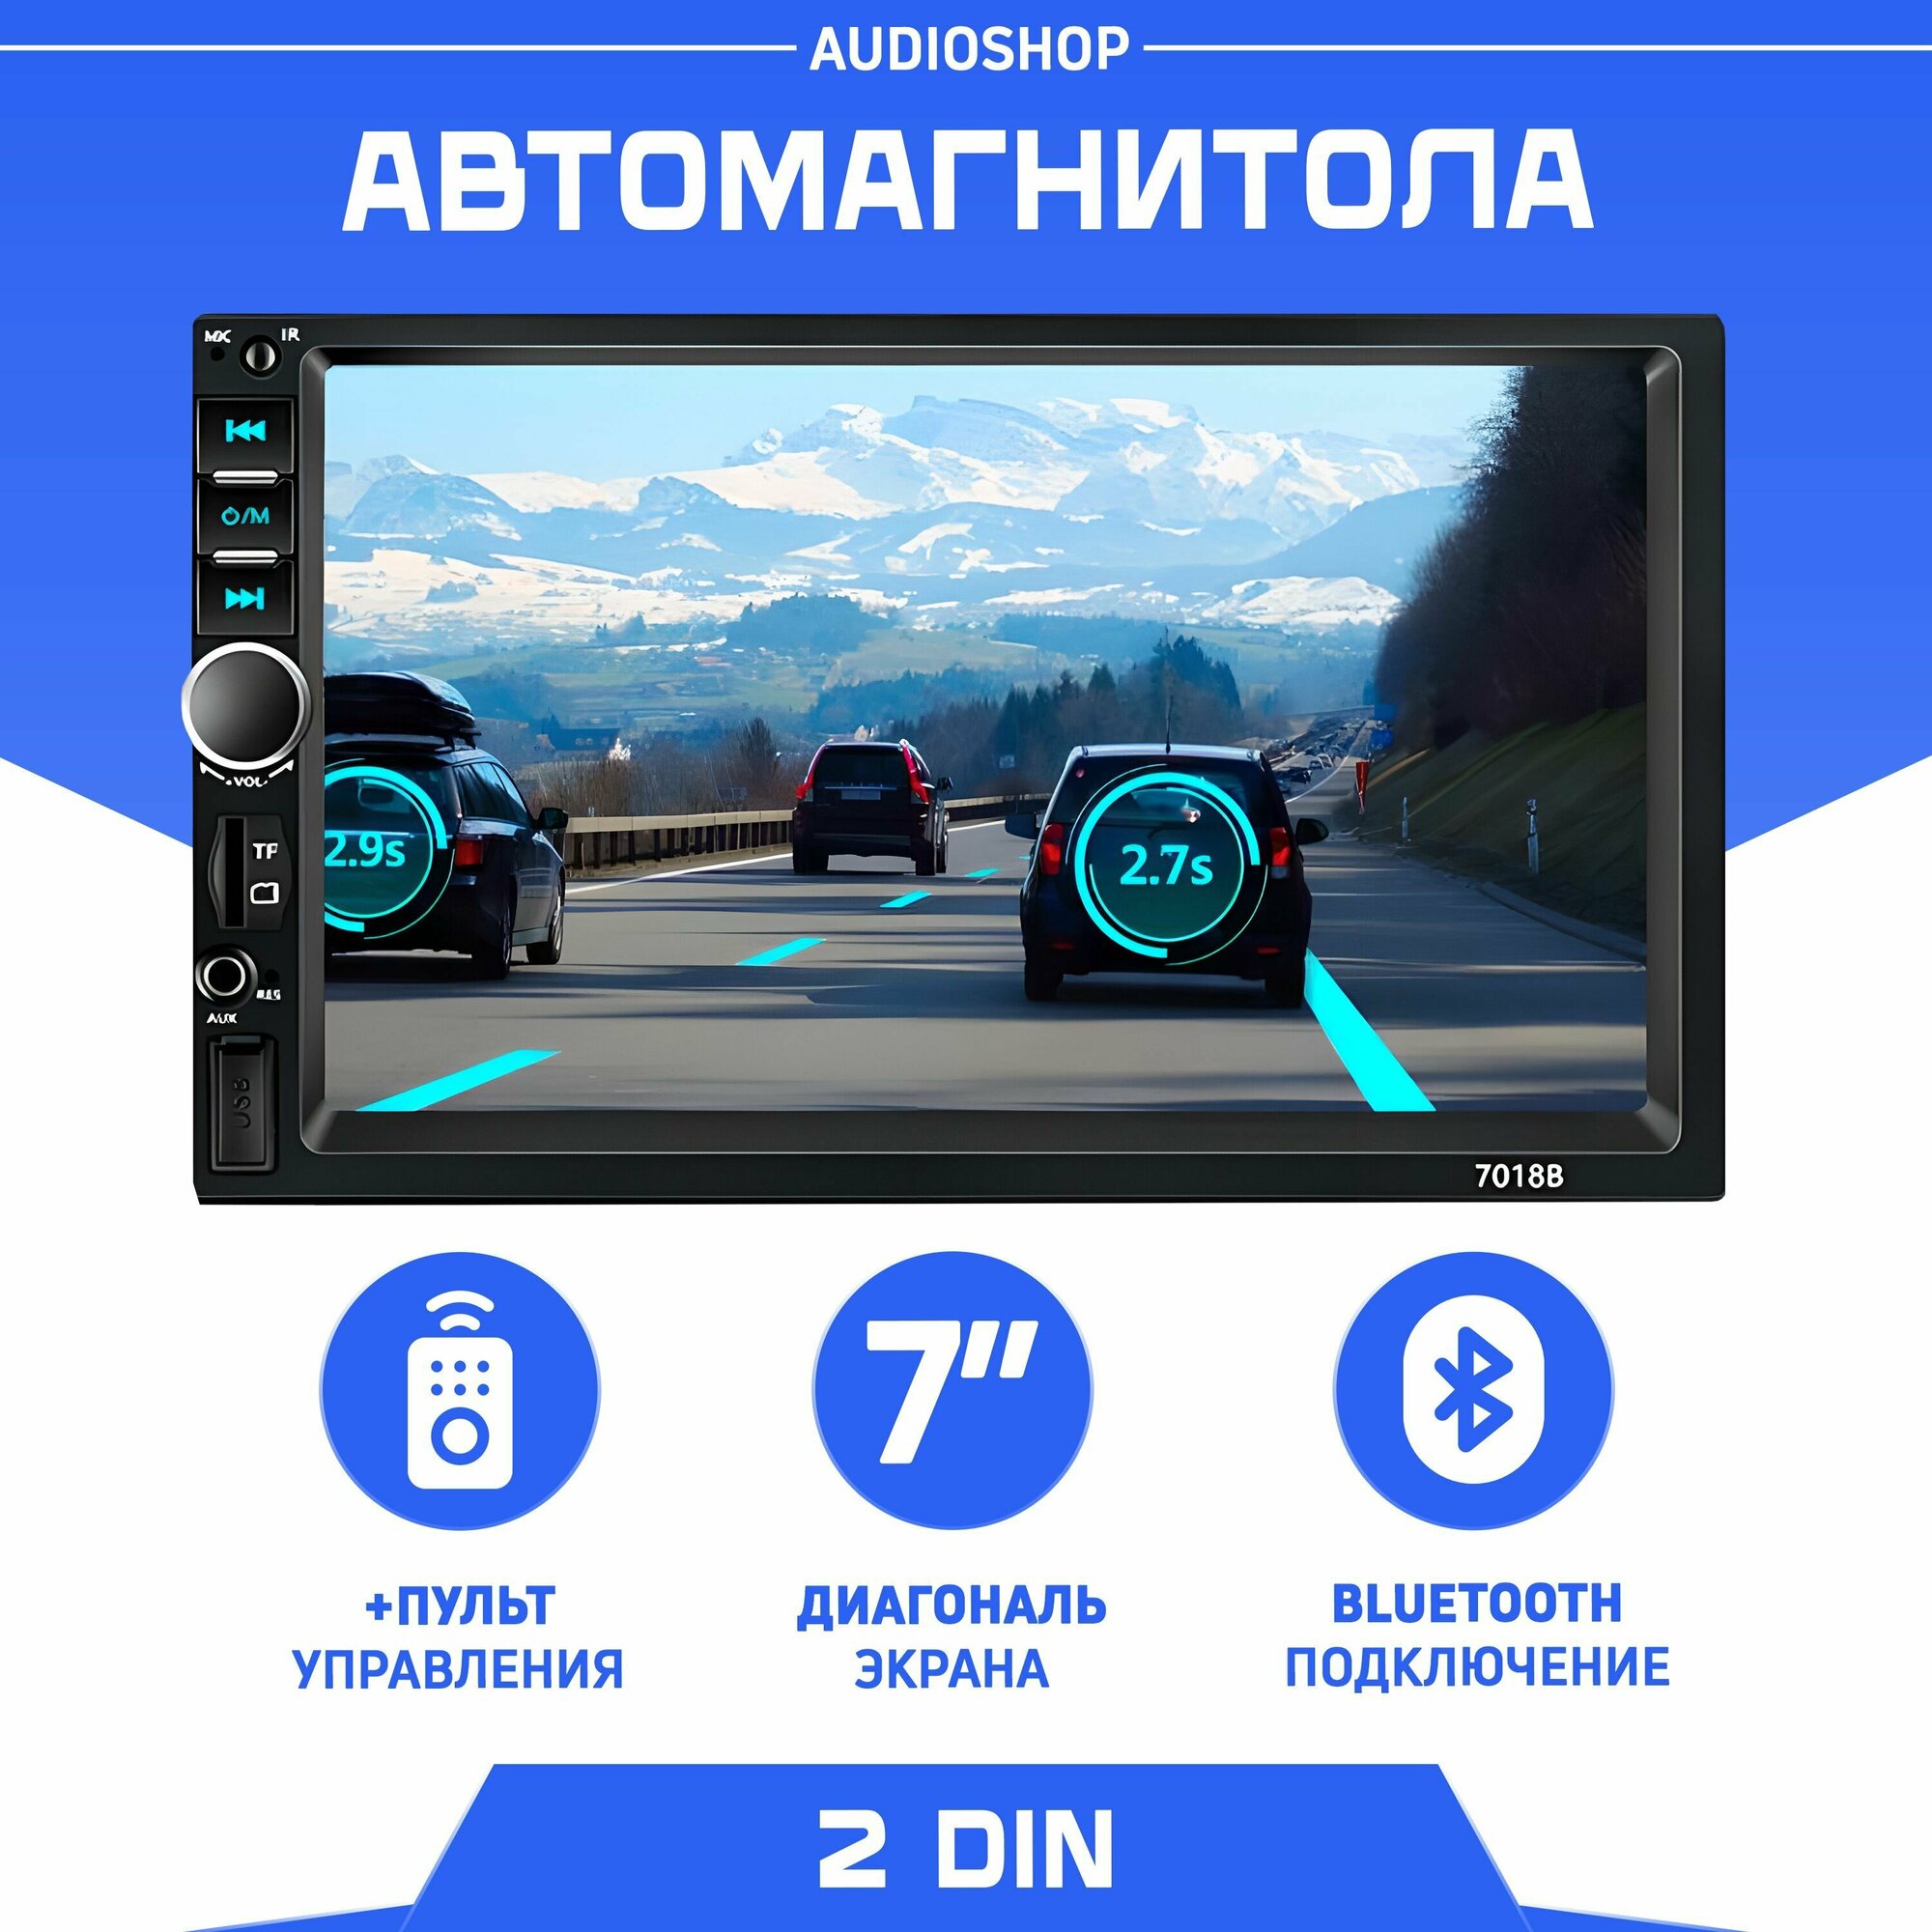 Автомагнитола 2din - универсальная для автомобиля HD экран пульт блютуз аукс